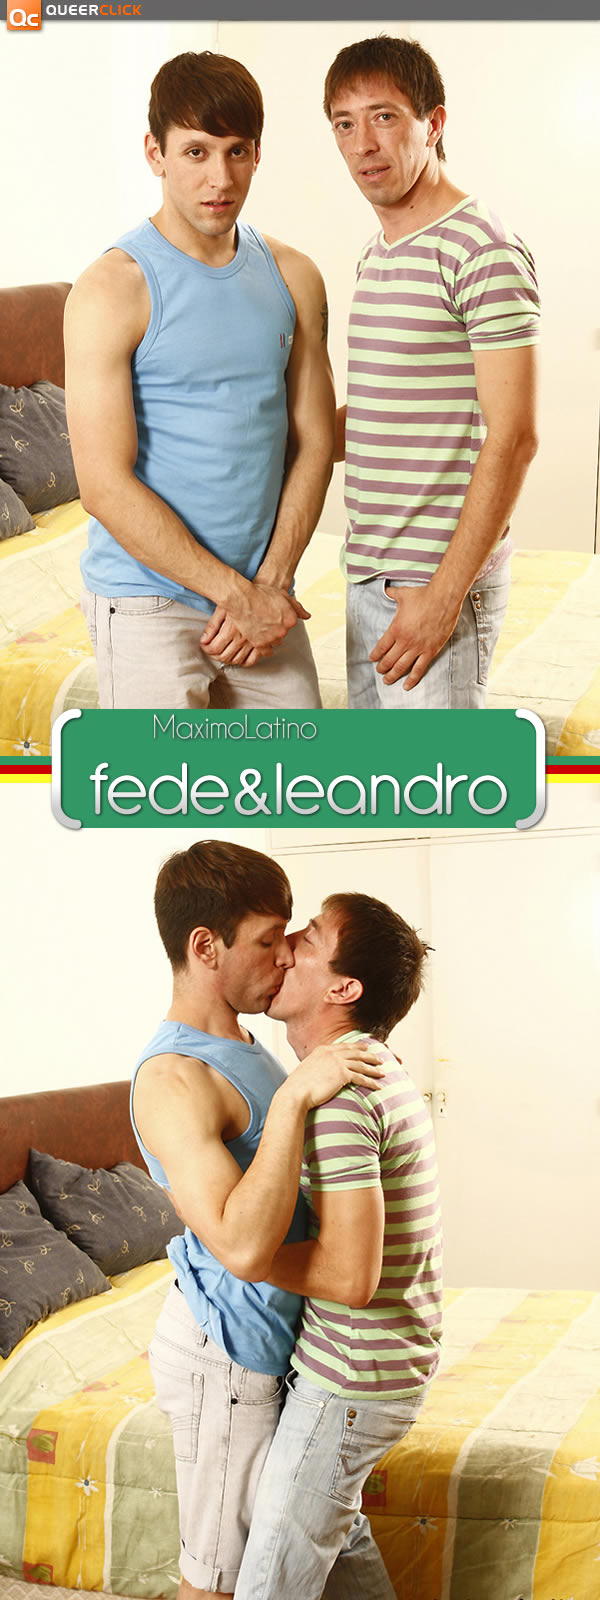 Maximo Latino: Fede y Leandro